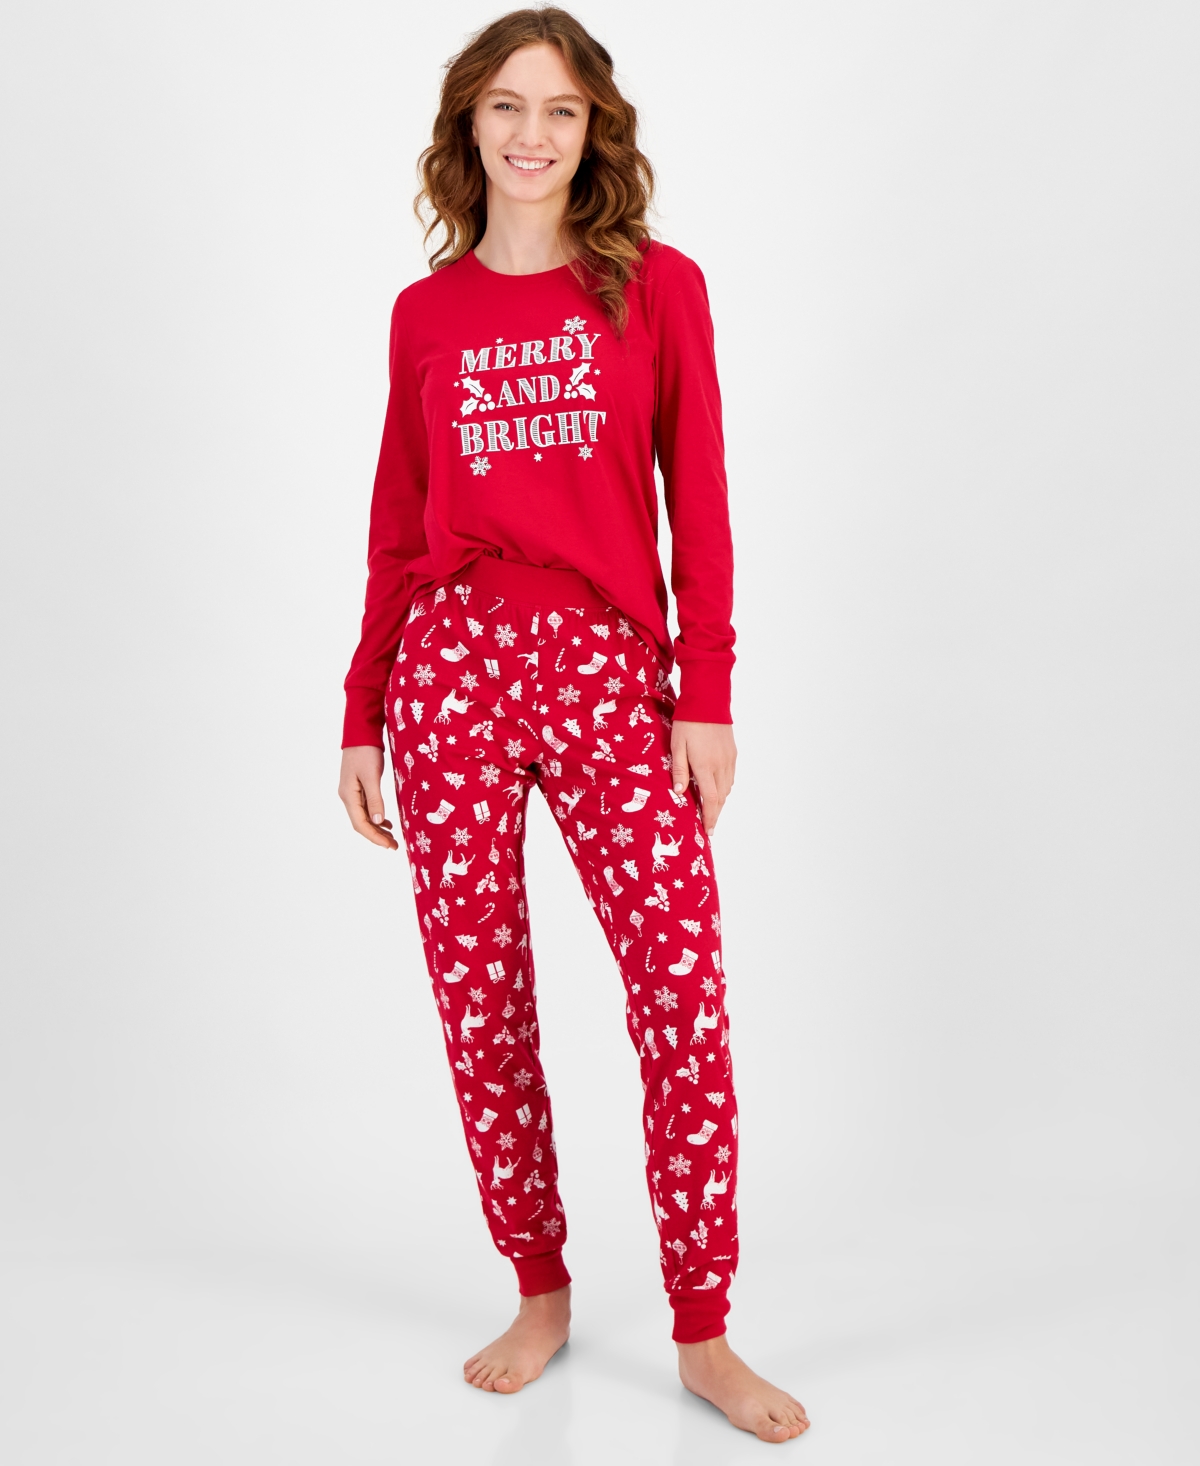 Matching Family Pajamas Women's Mix It Merry & Bright Pajamas Set, Created for Macy's - Merry